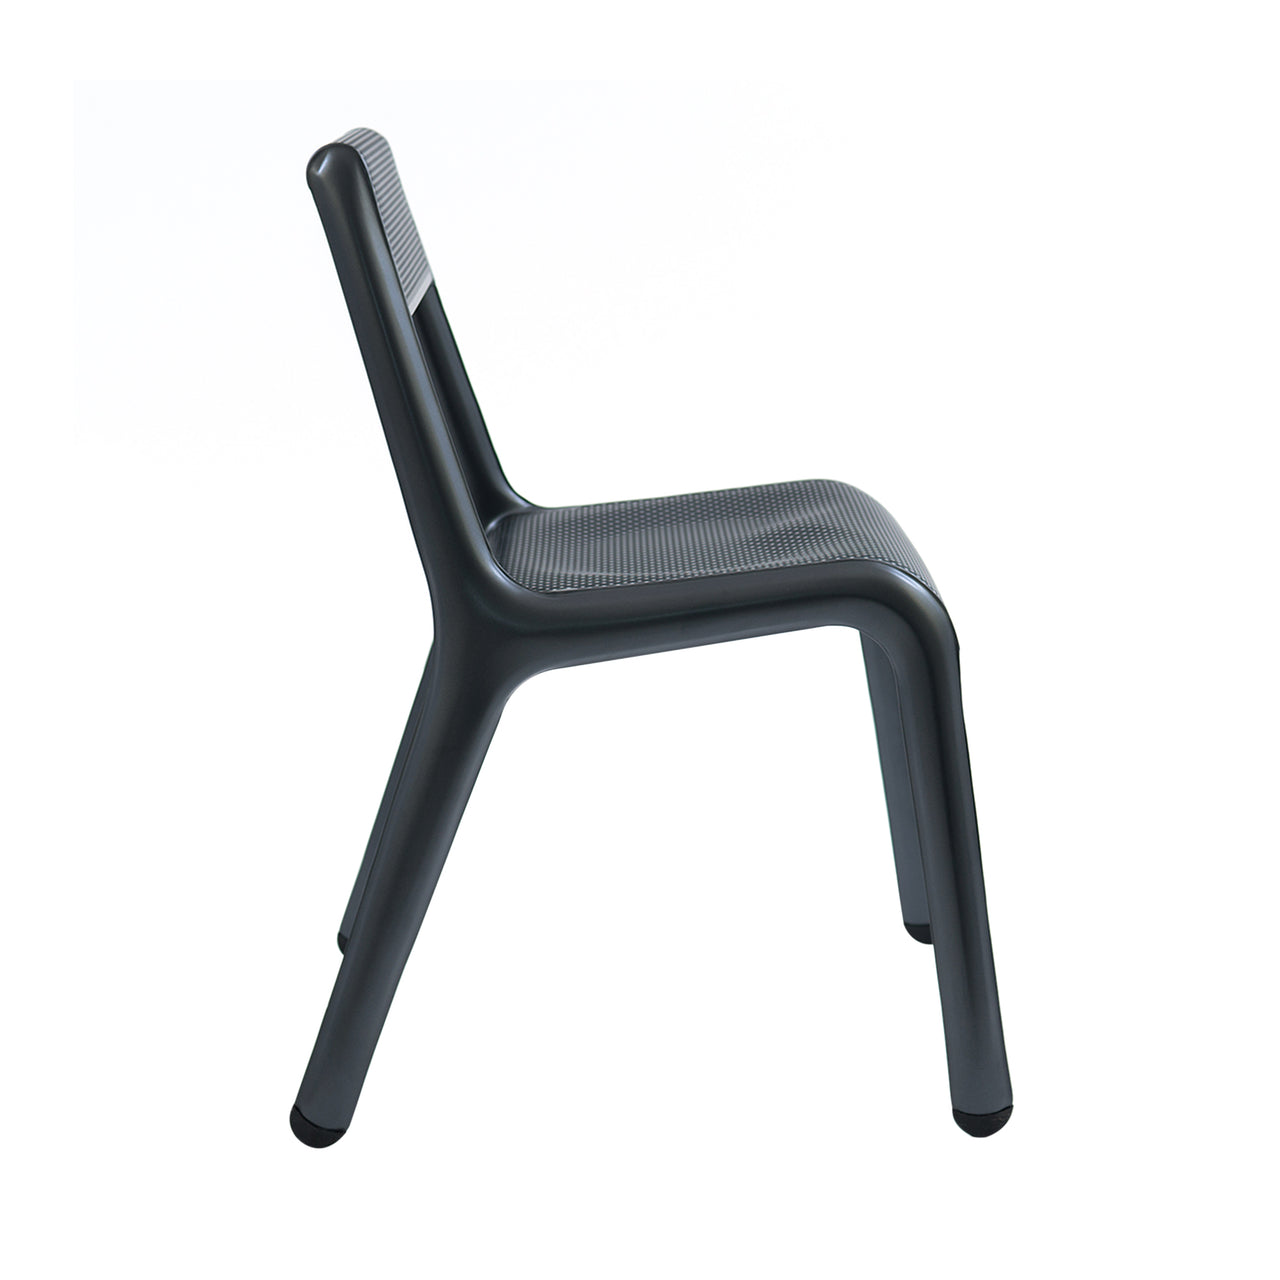 Ultraleggera Chair: Anodic Black